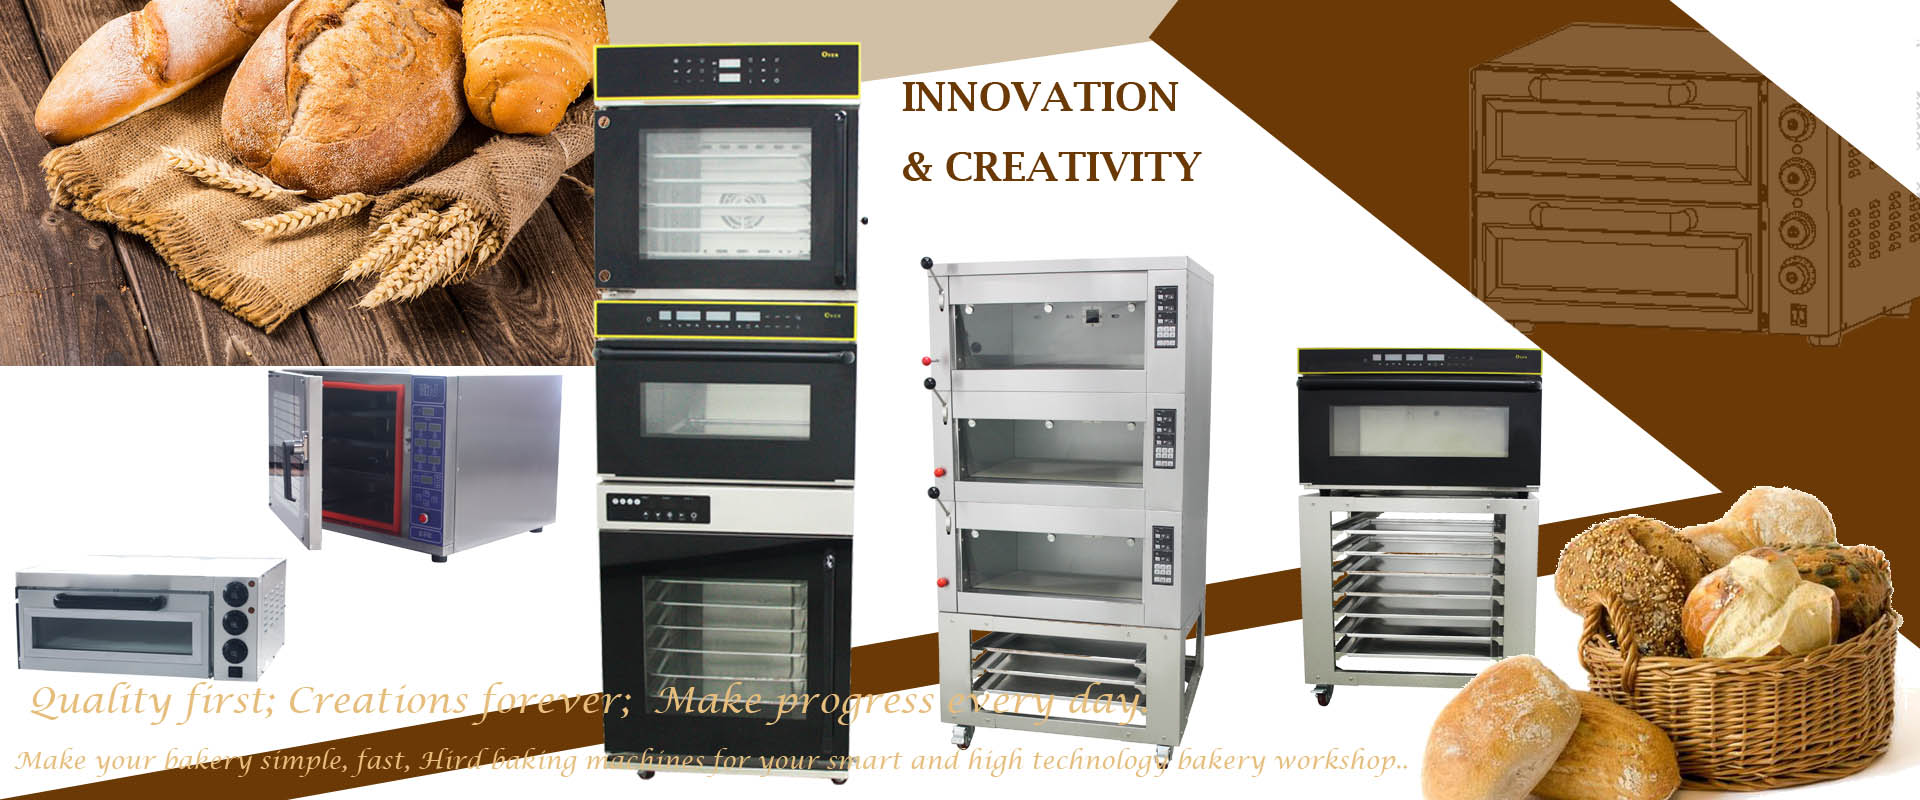 Hird Bakery machines for smart bakery workshop